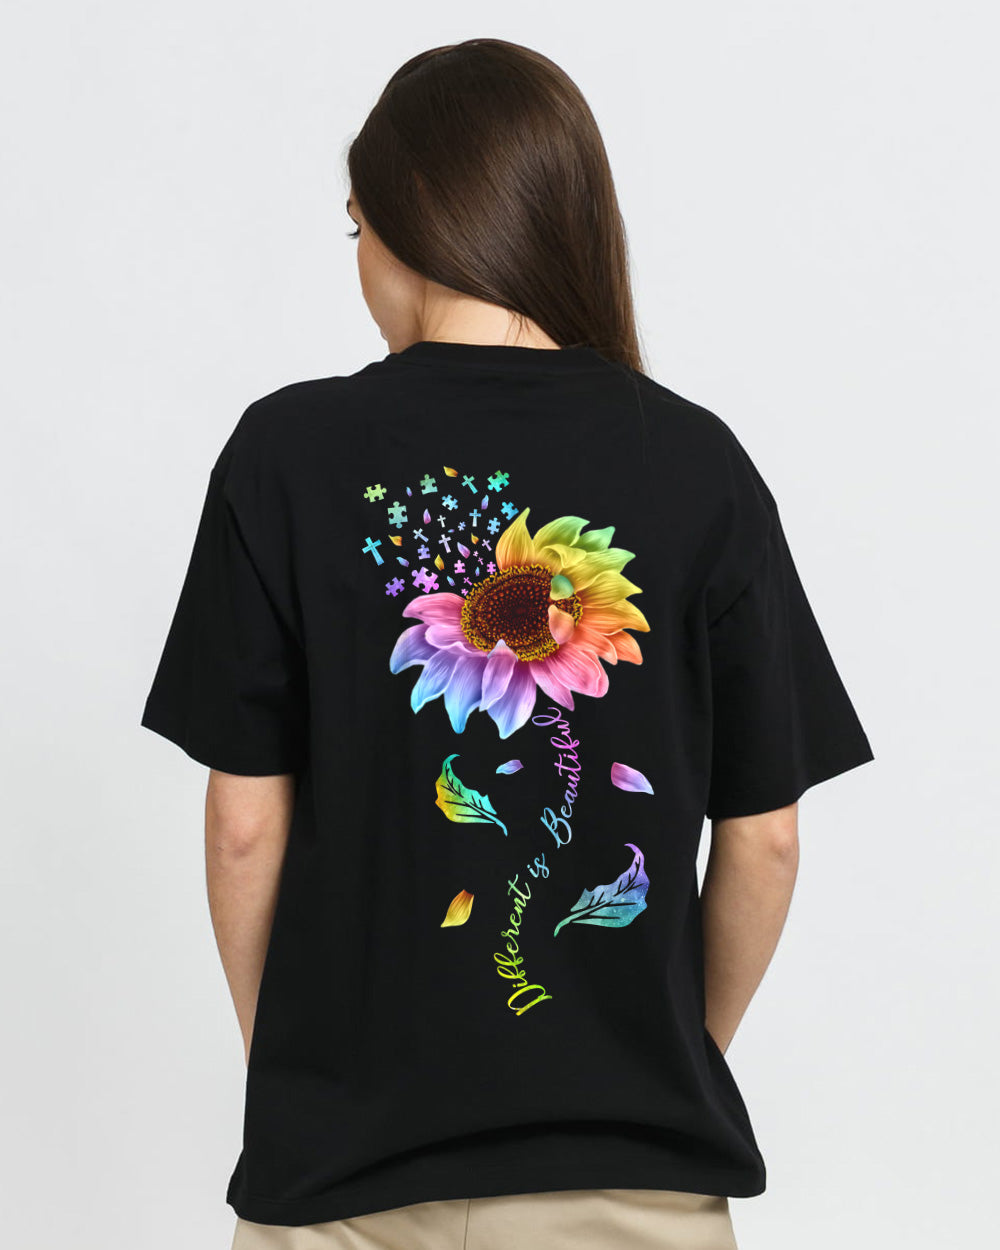 Different Is Beautiful Rainbow Sunflower Women's Autism Awareness Tshirt